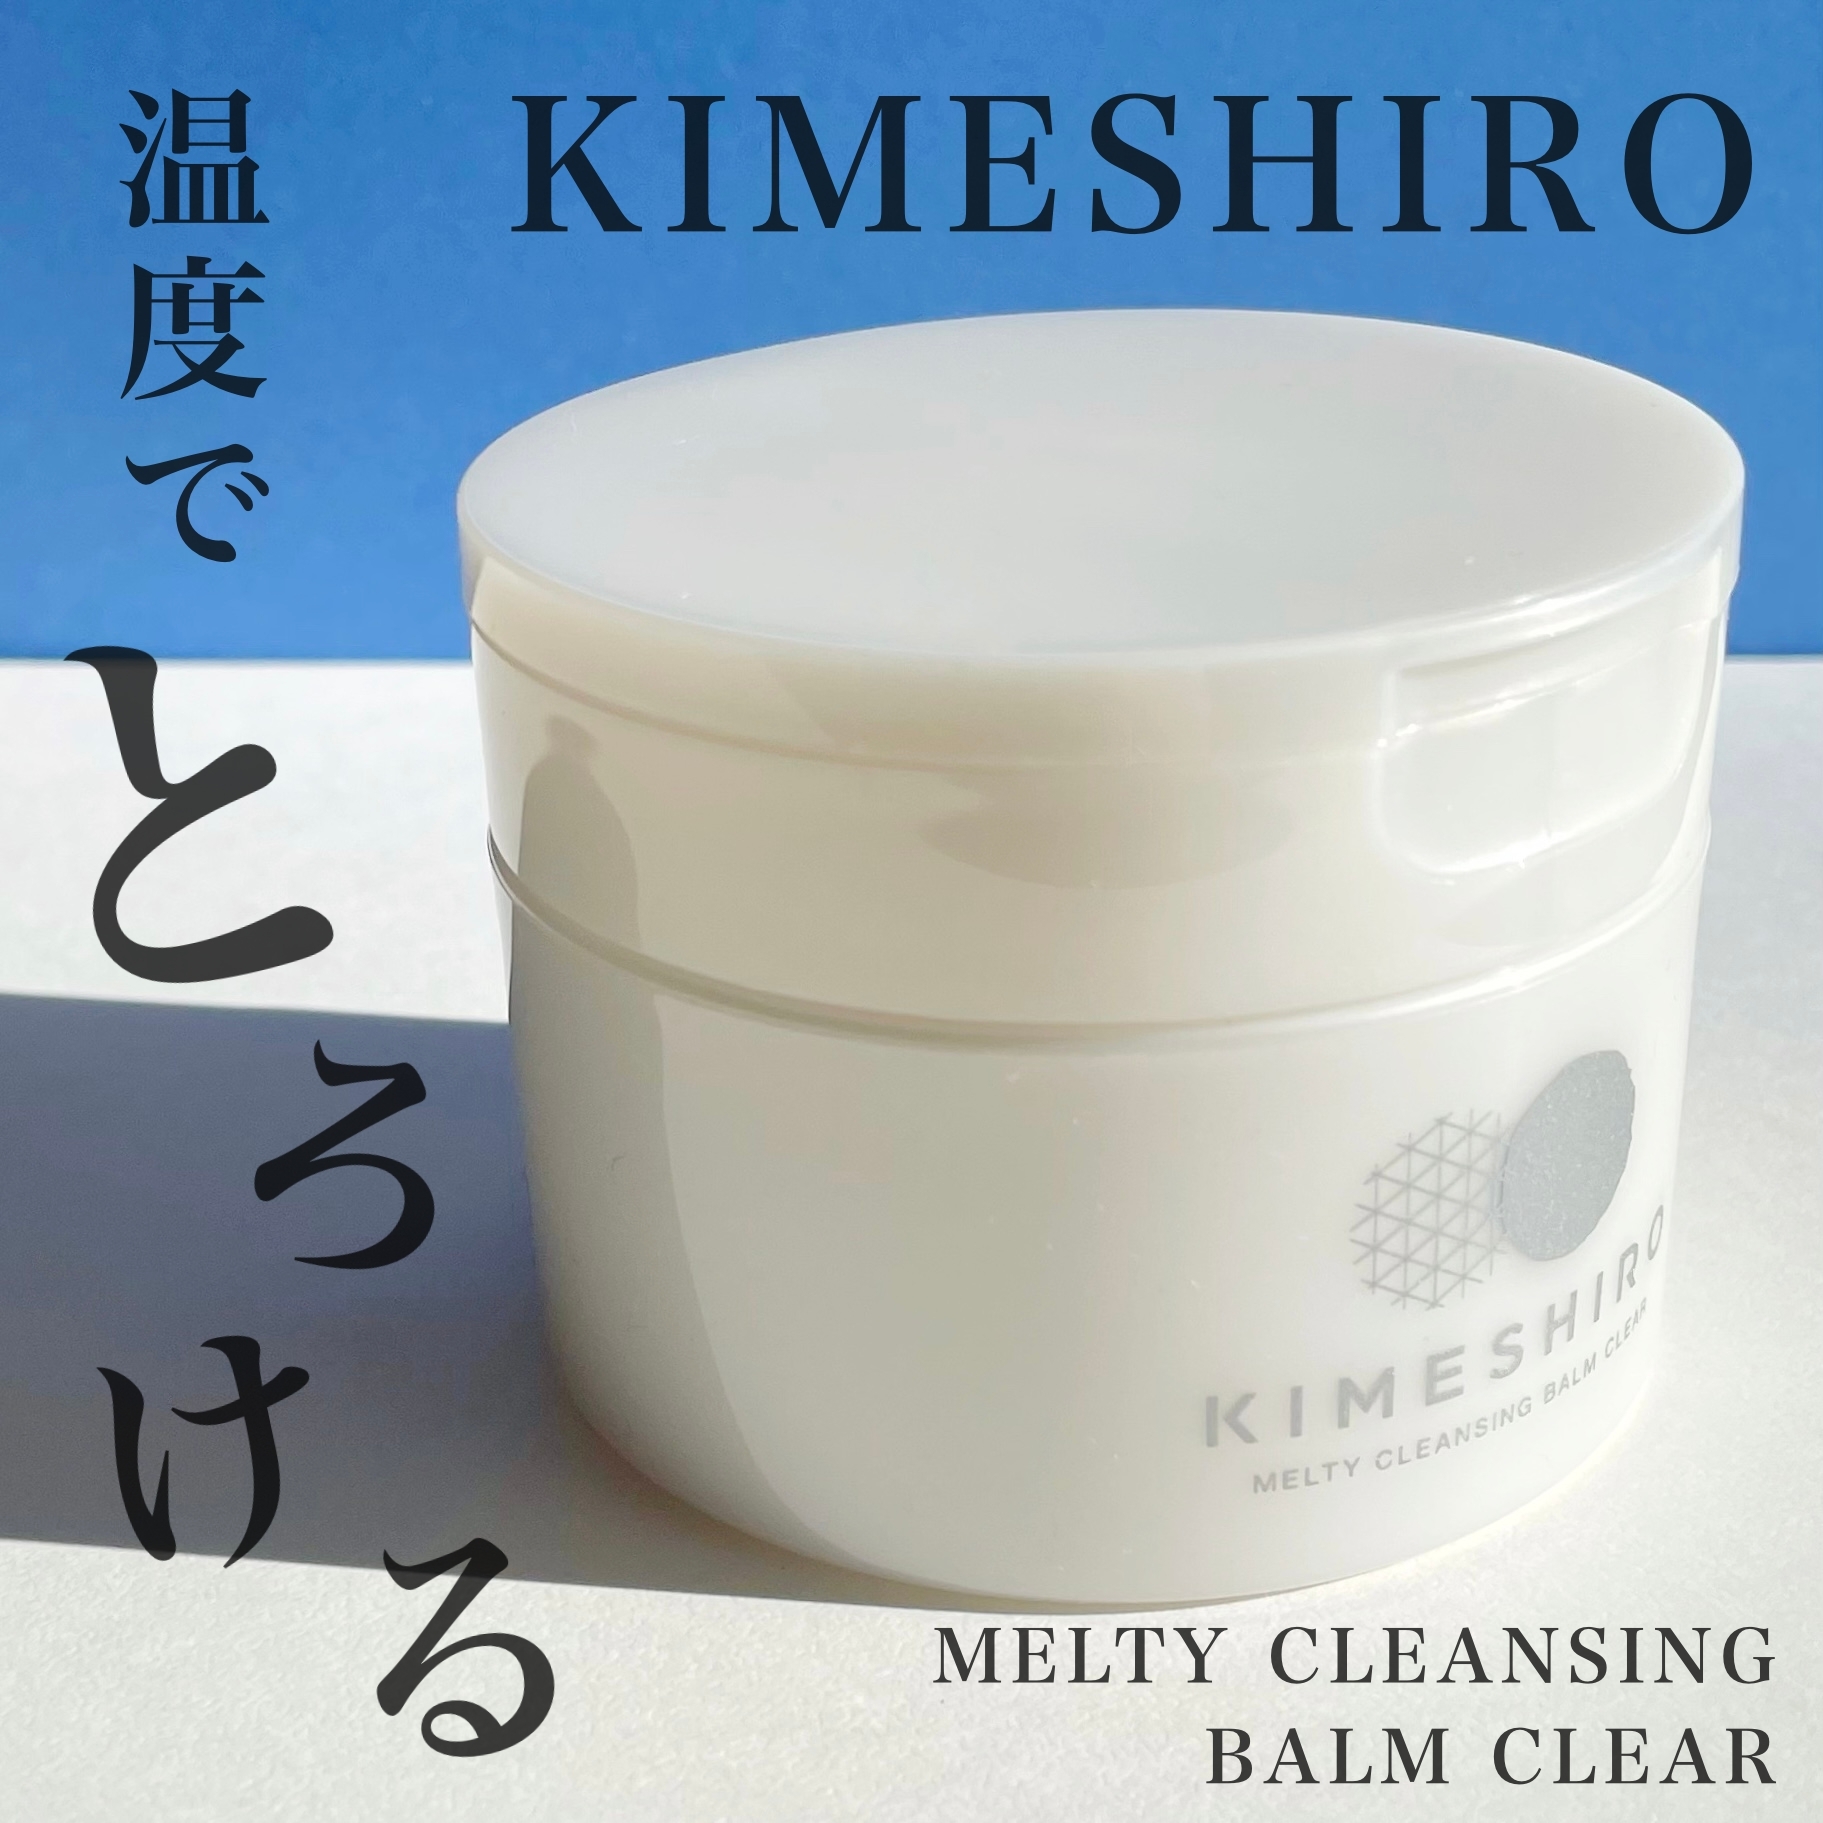 KIMESHIRO(キメシロ) メルティクレンジングバーム クリアの良い点・メリットに関するKeiさんの口コミ画像1